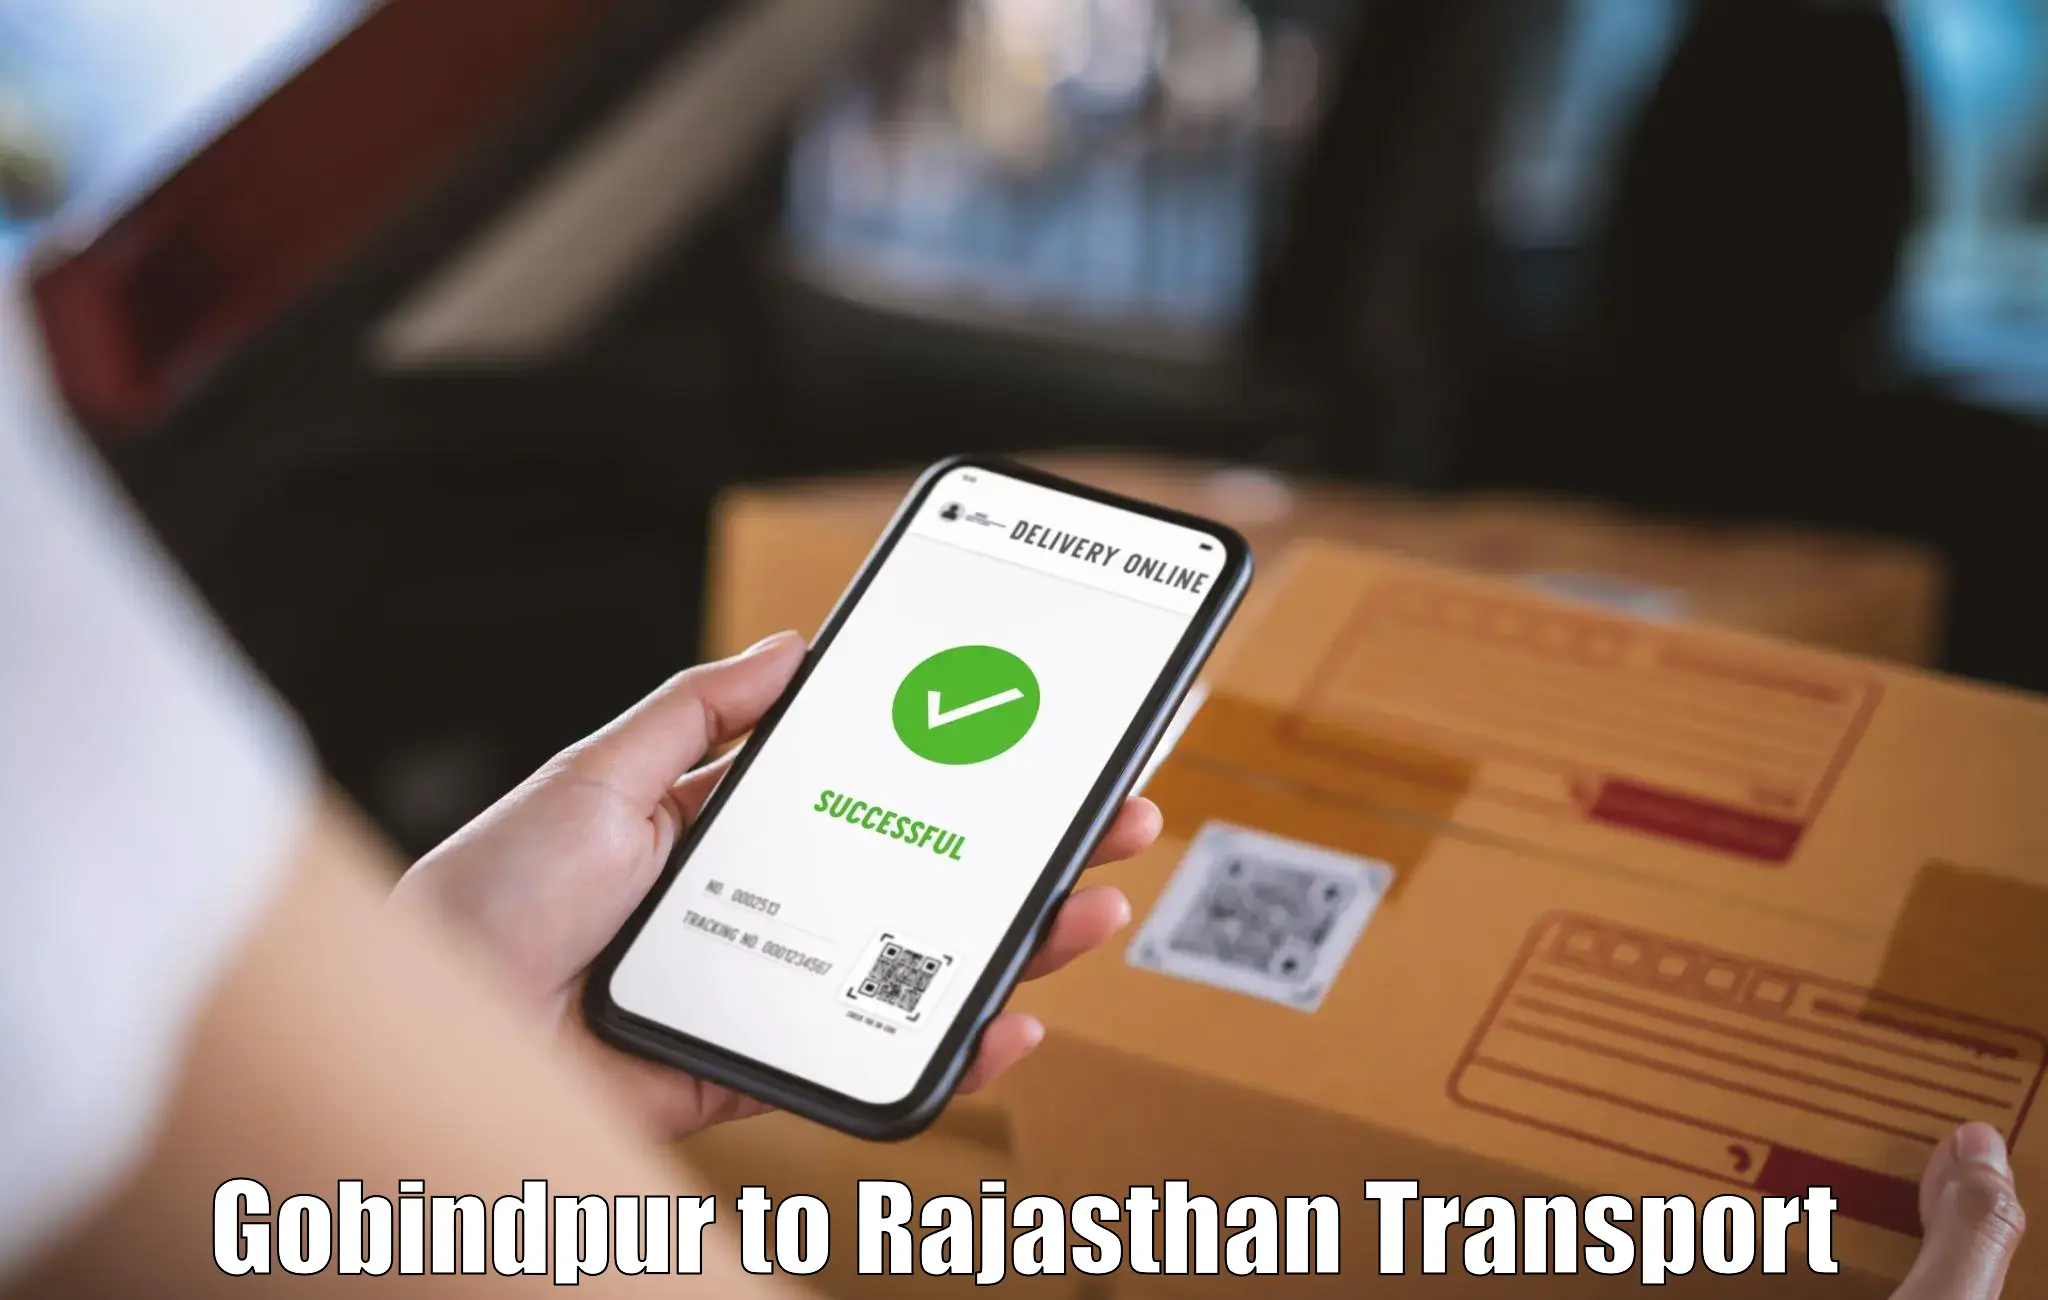 Online transport booking Gobindpur to Nainwa